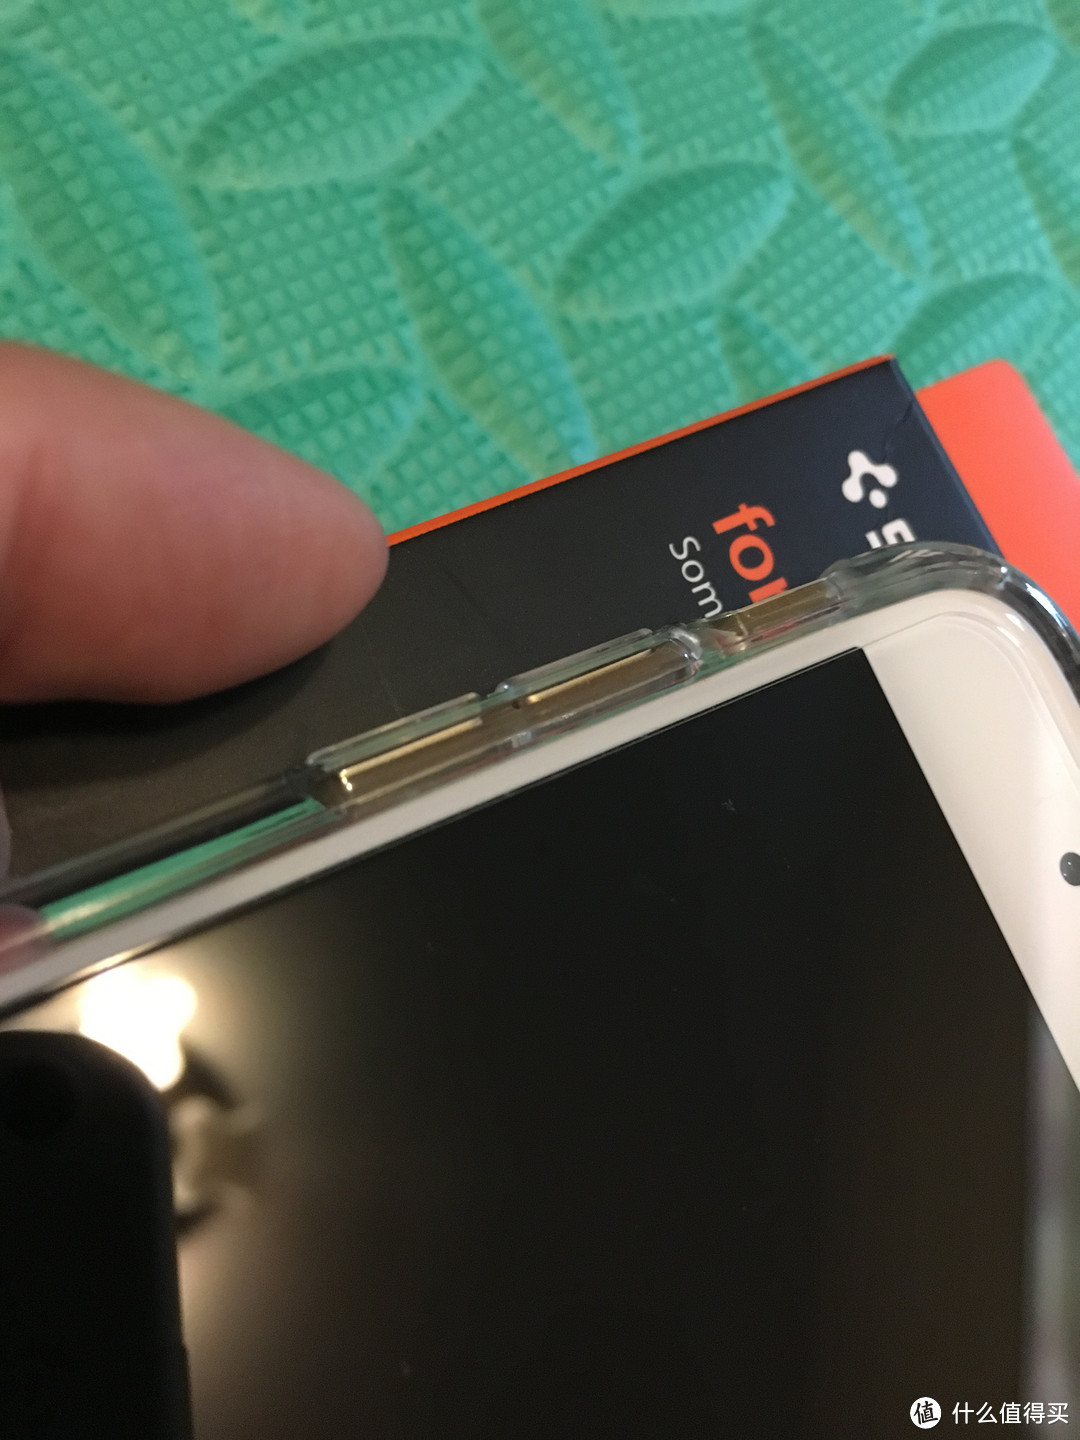 Spigen Ultra Hybrid iPhone6S 透明保险杠外壳开箱及中亚退货经历